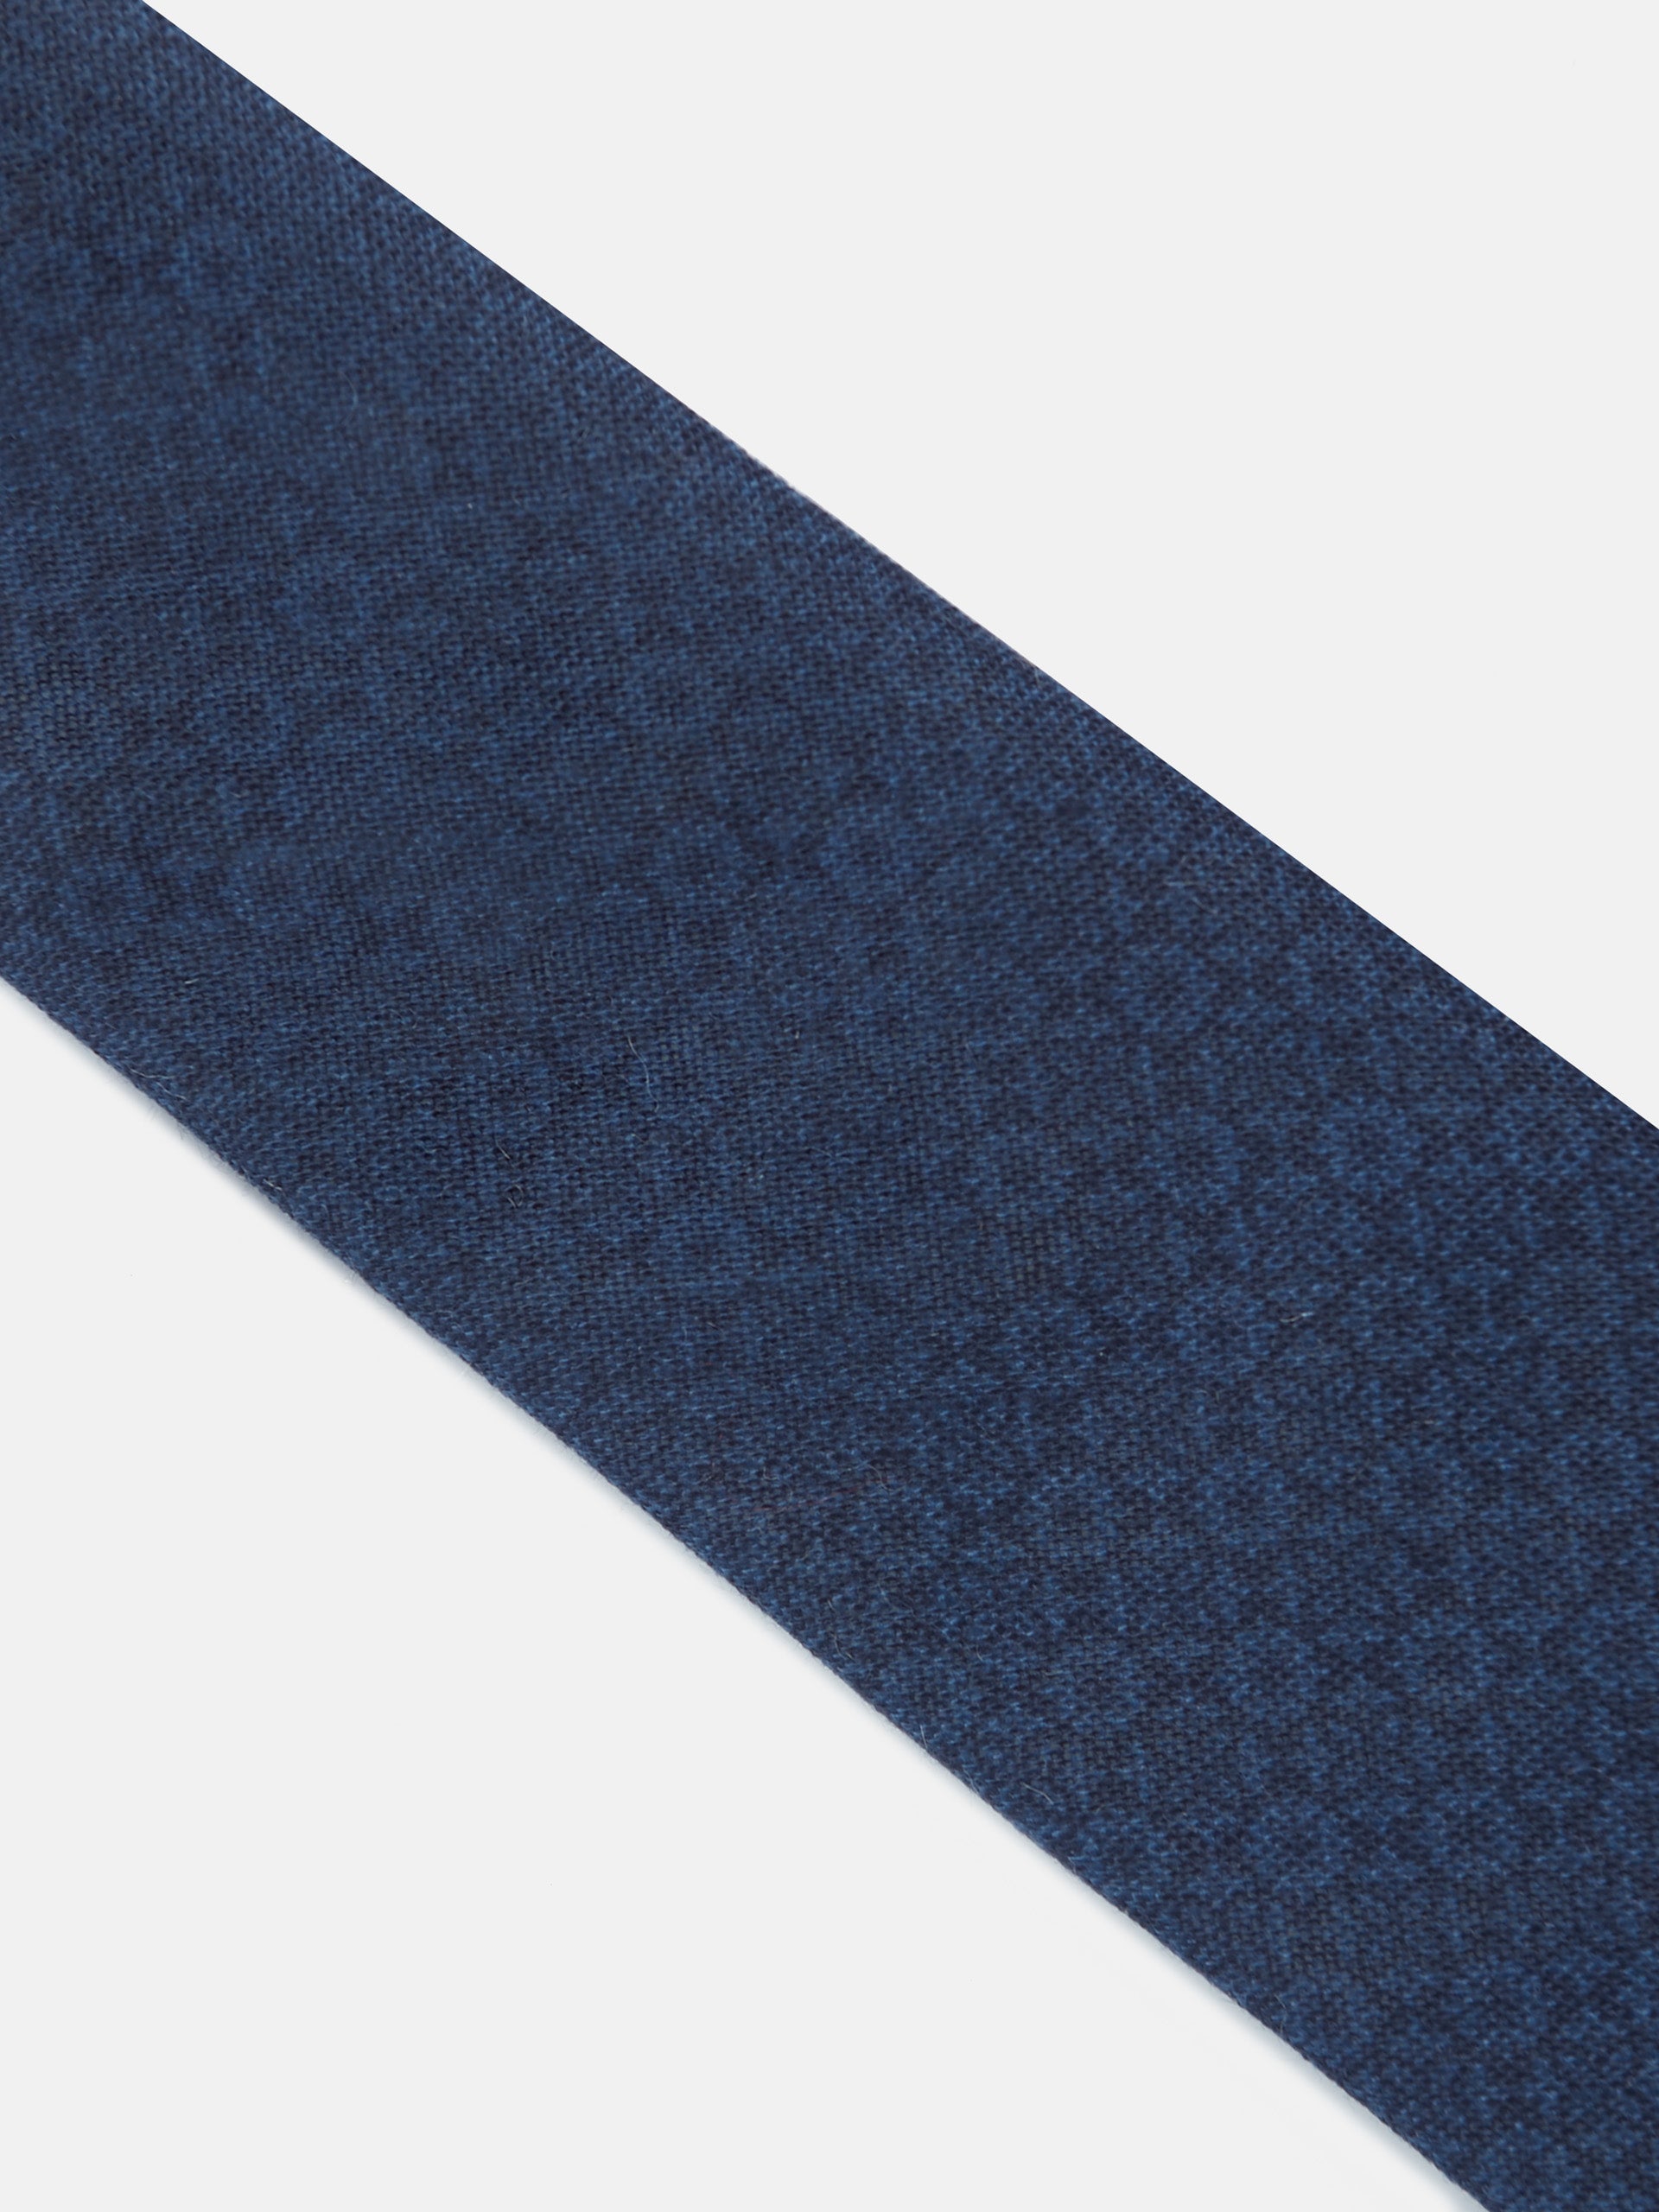 Cravate Asti à motifs bleus